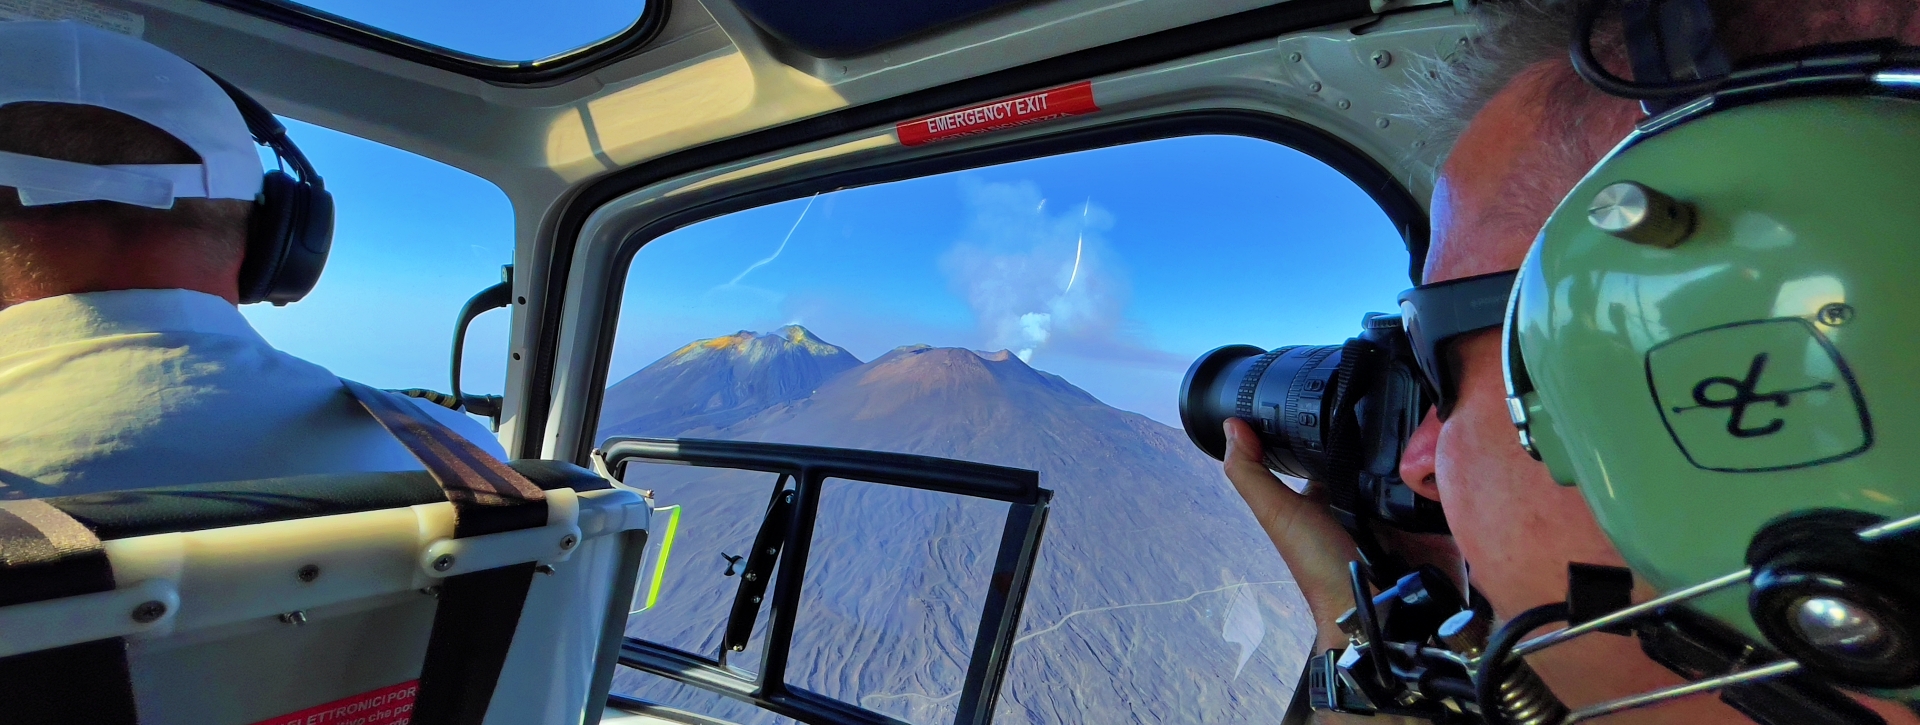 Tour in elicottero dell'Etna